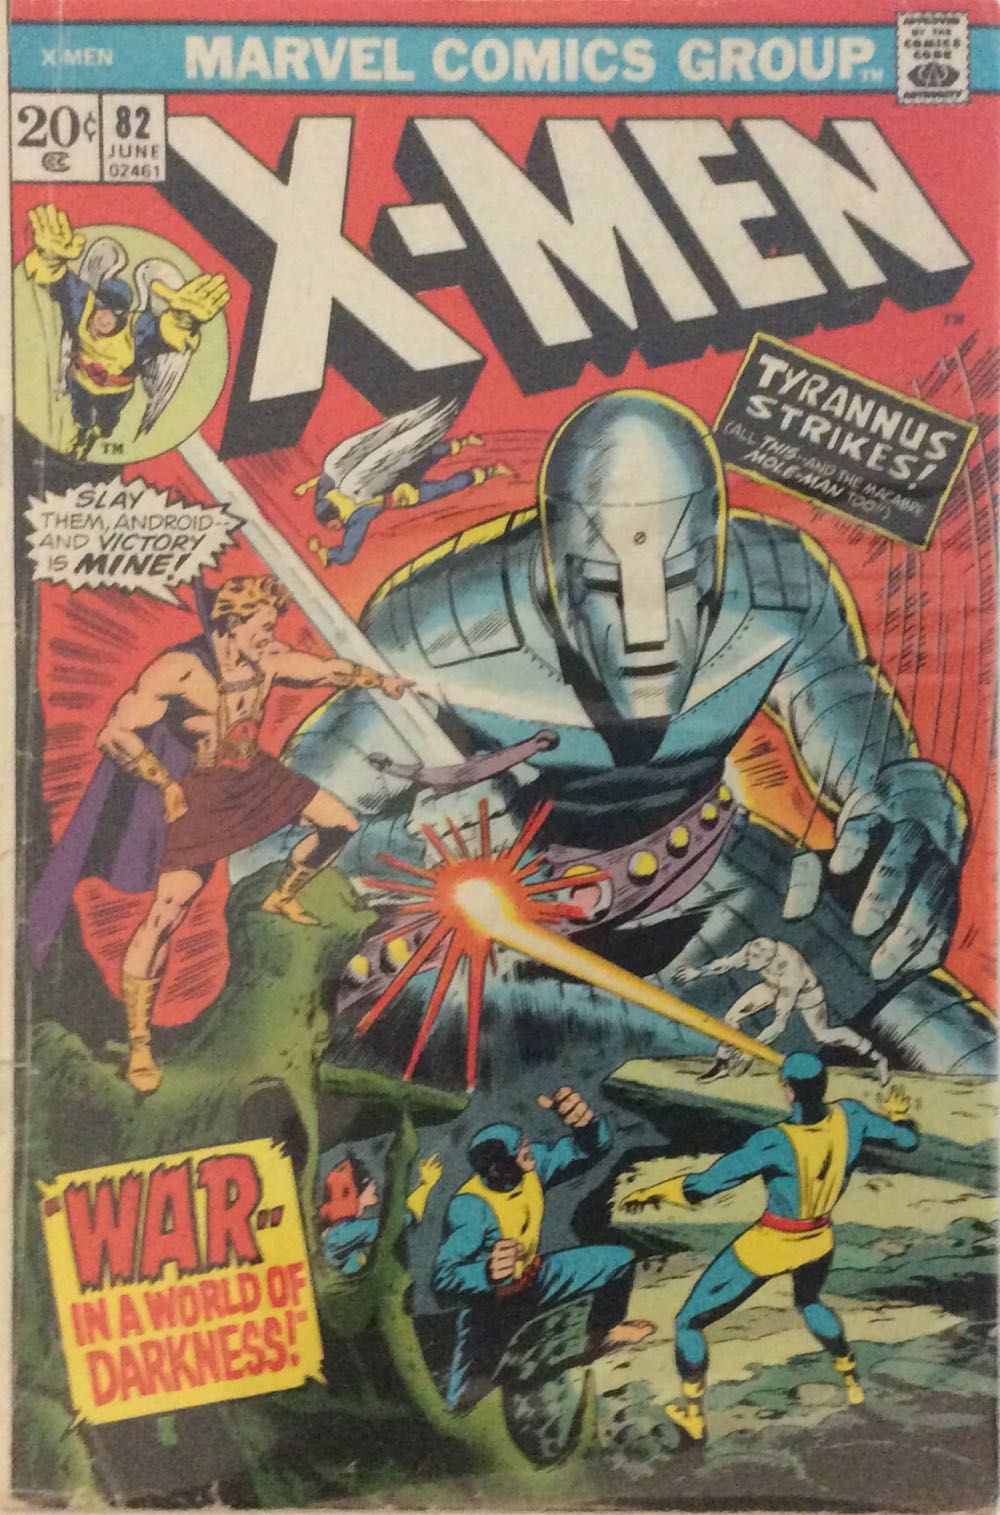 X-Men Vol 1 - Marvel Comics (82 - Jun 1974) comic book collectible - Main Image 2